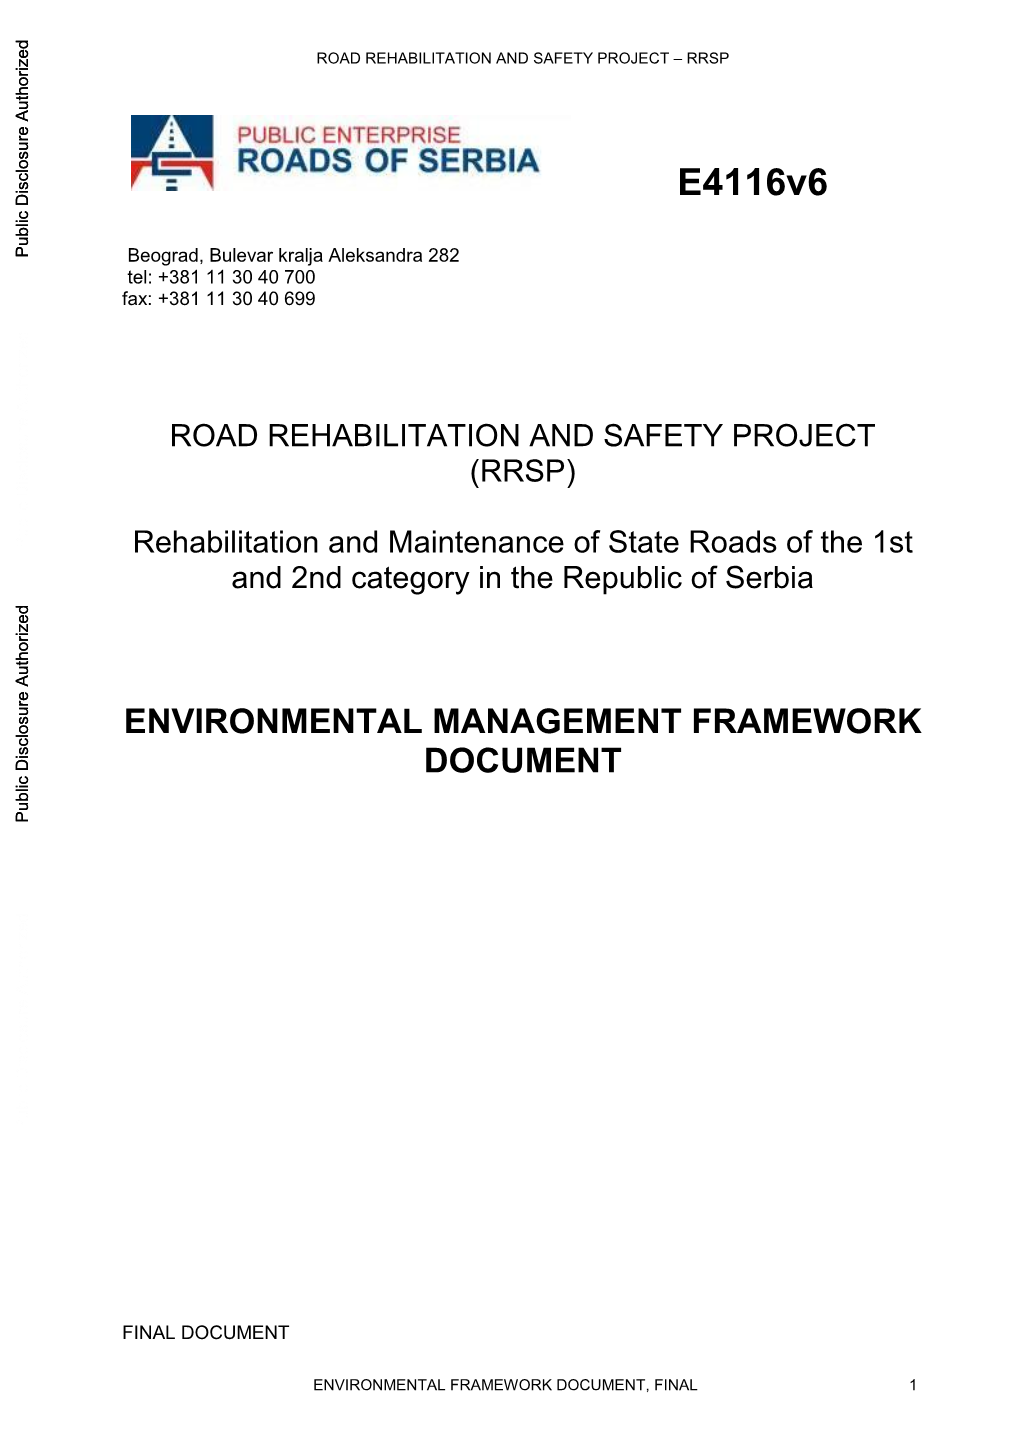 Environmental Management Framework Document